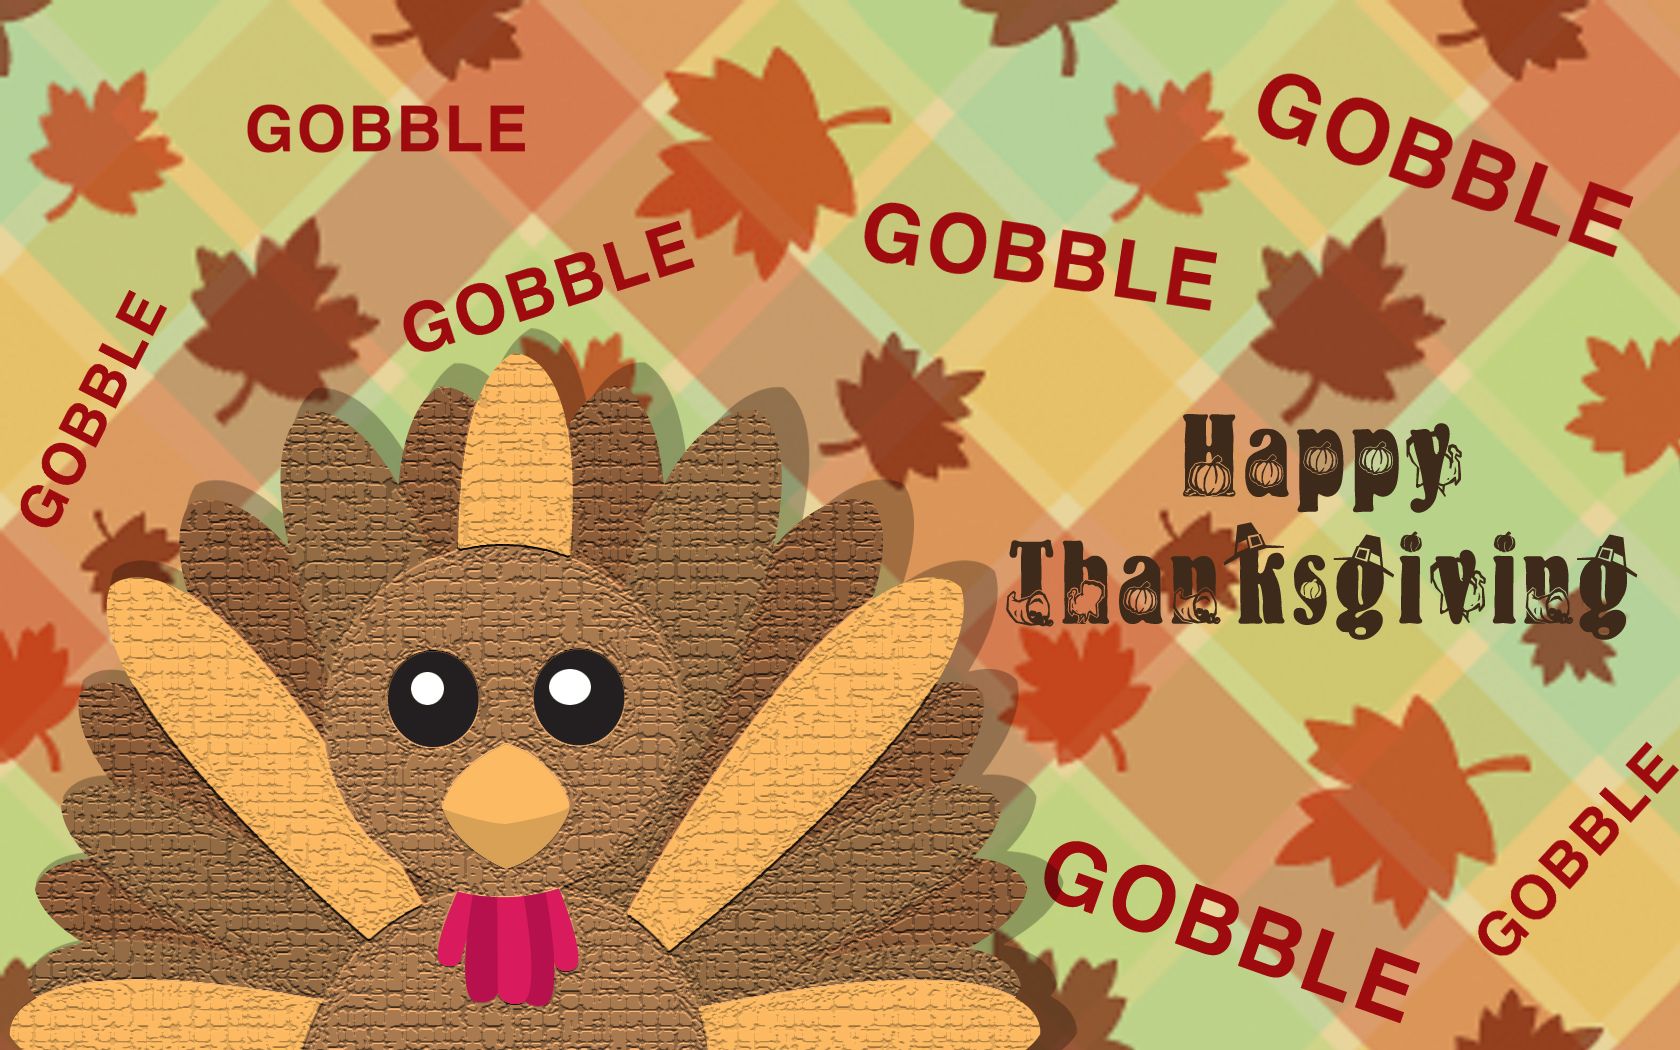 Thanksgiving Desktop Wallpaper Top